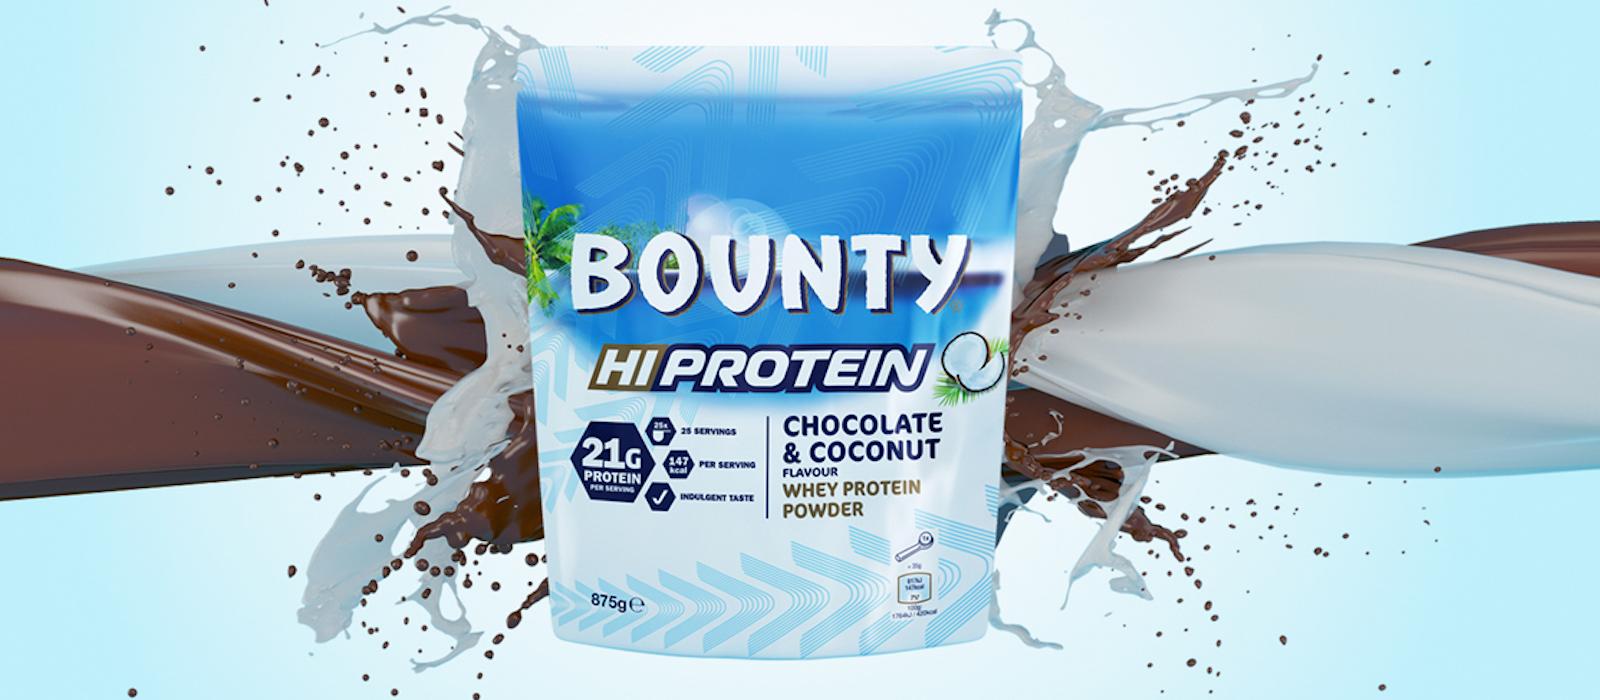 Bounty hi protein powder